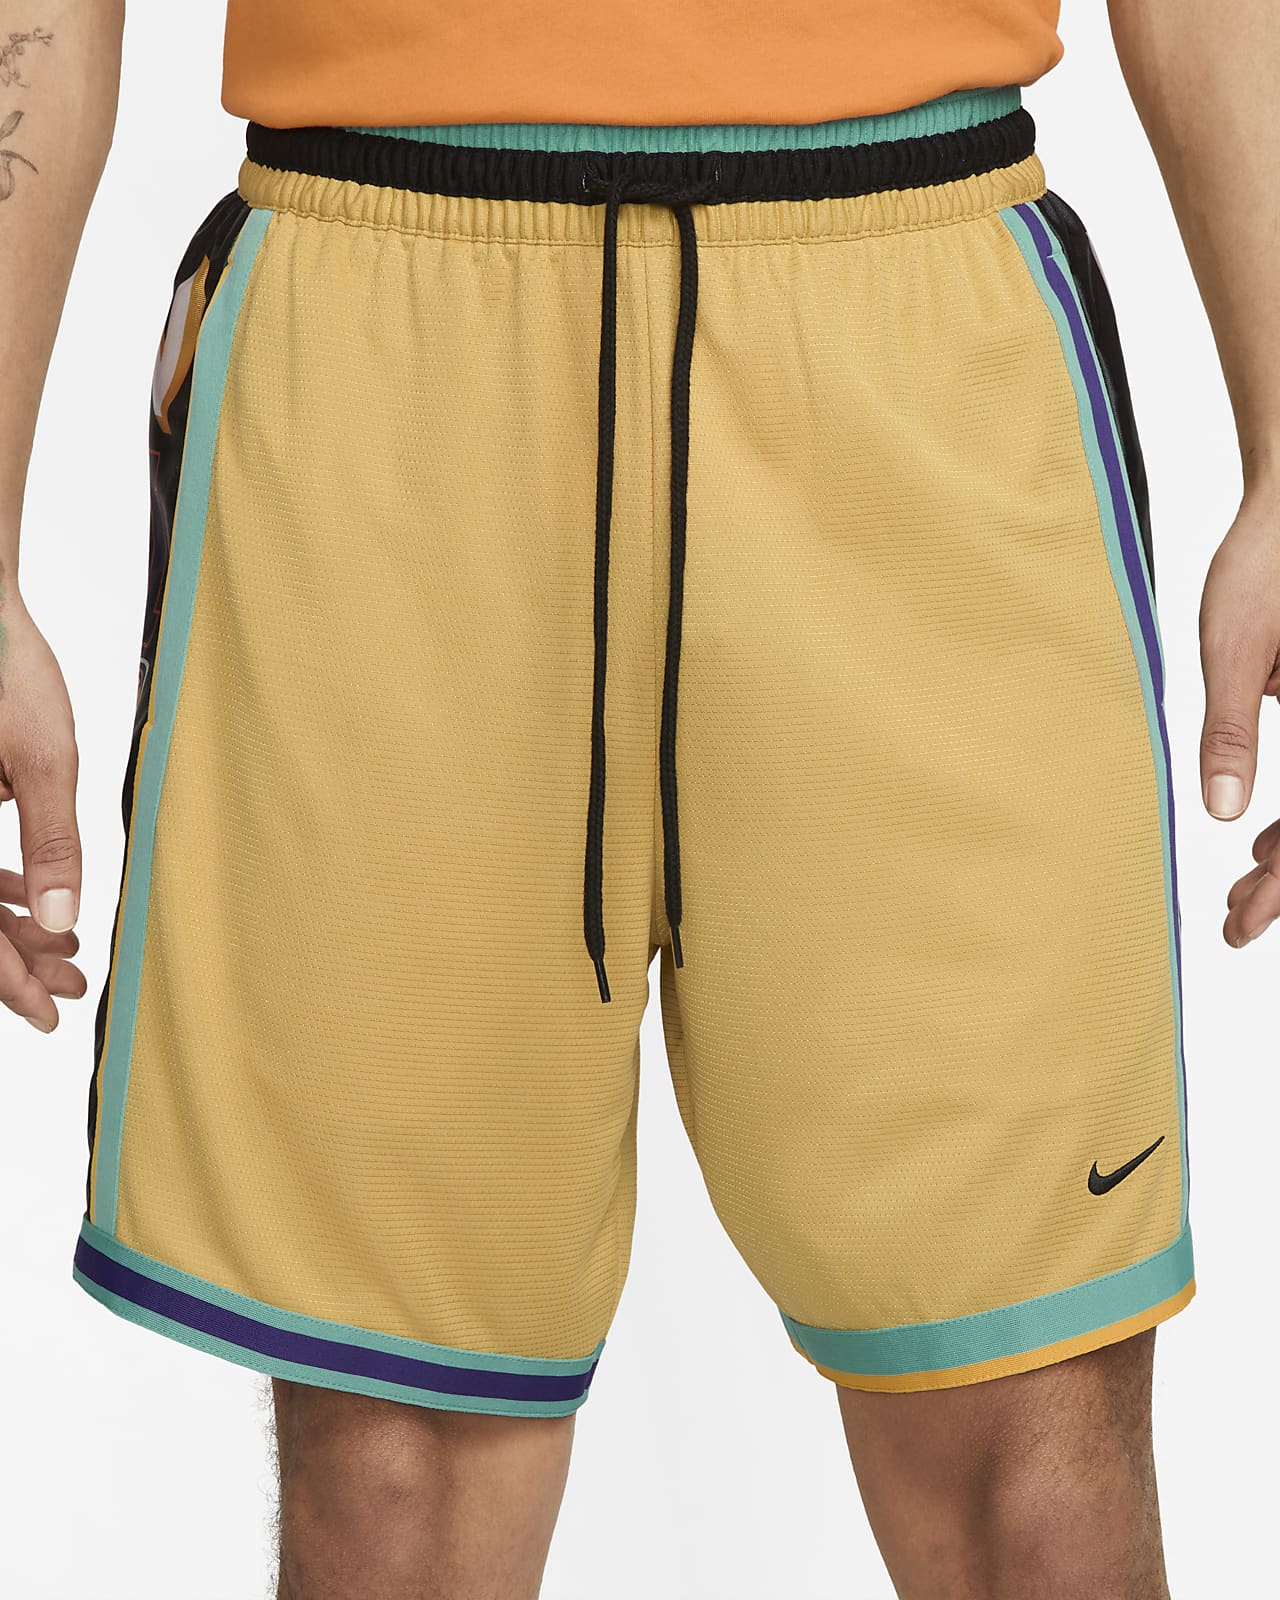 Nike Men's Basketball DNA Shorts, Loose Fit Dri-FIT